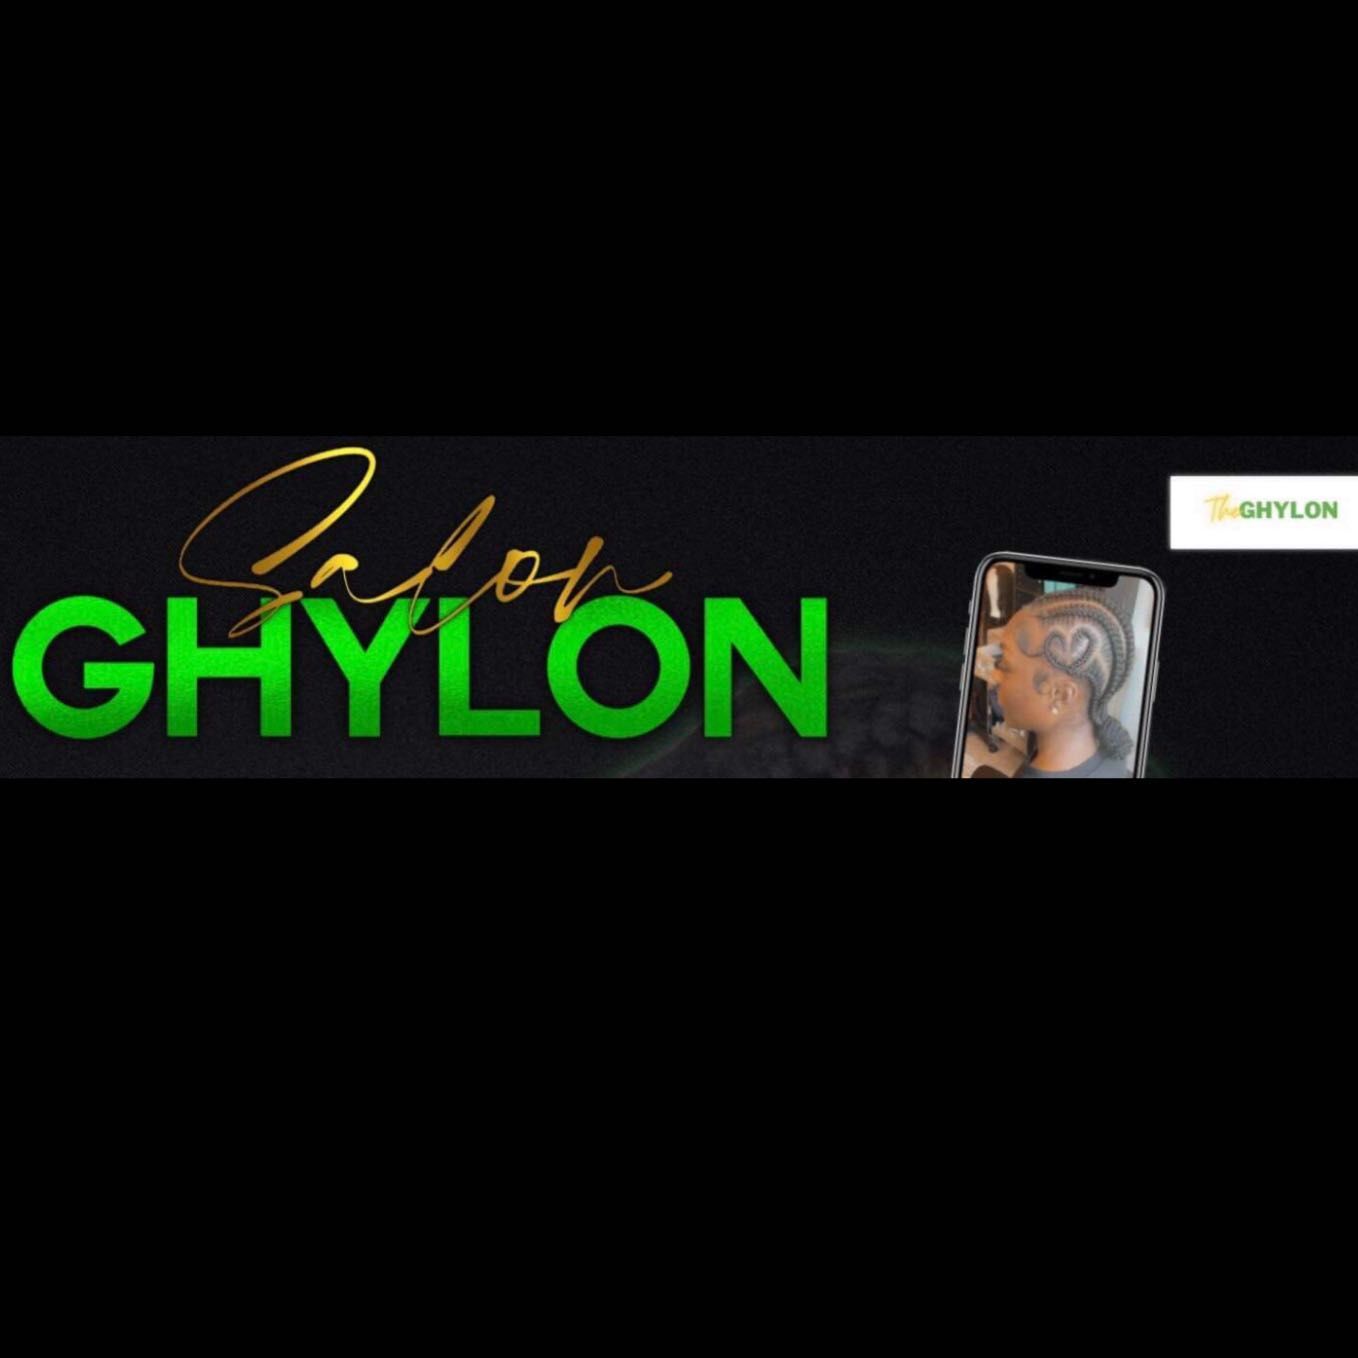 Salon ghylon, 524 Arthur Godfrey Rd, 204, Miami Beach, 33140